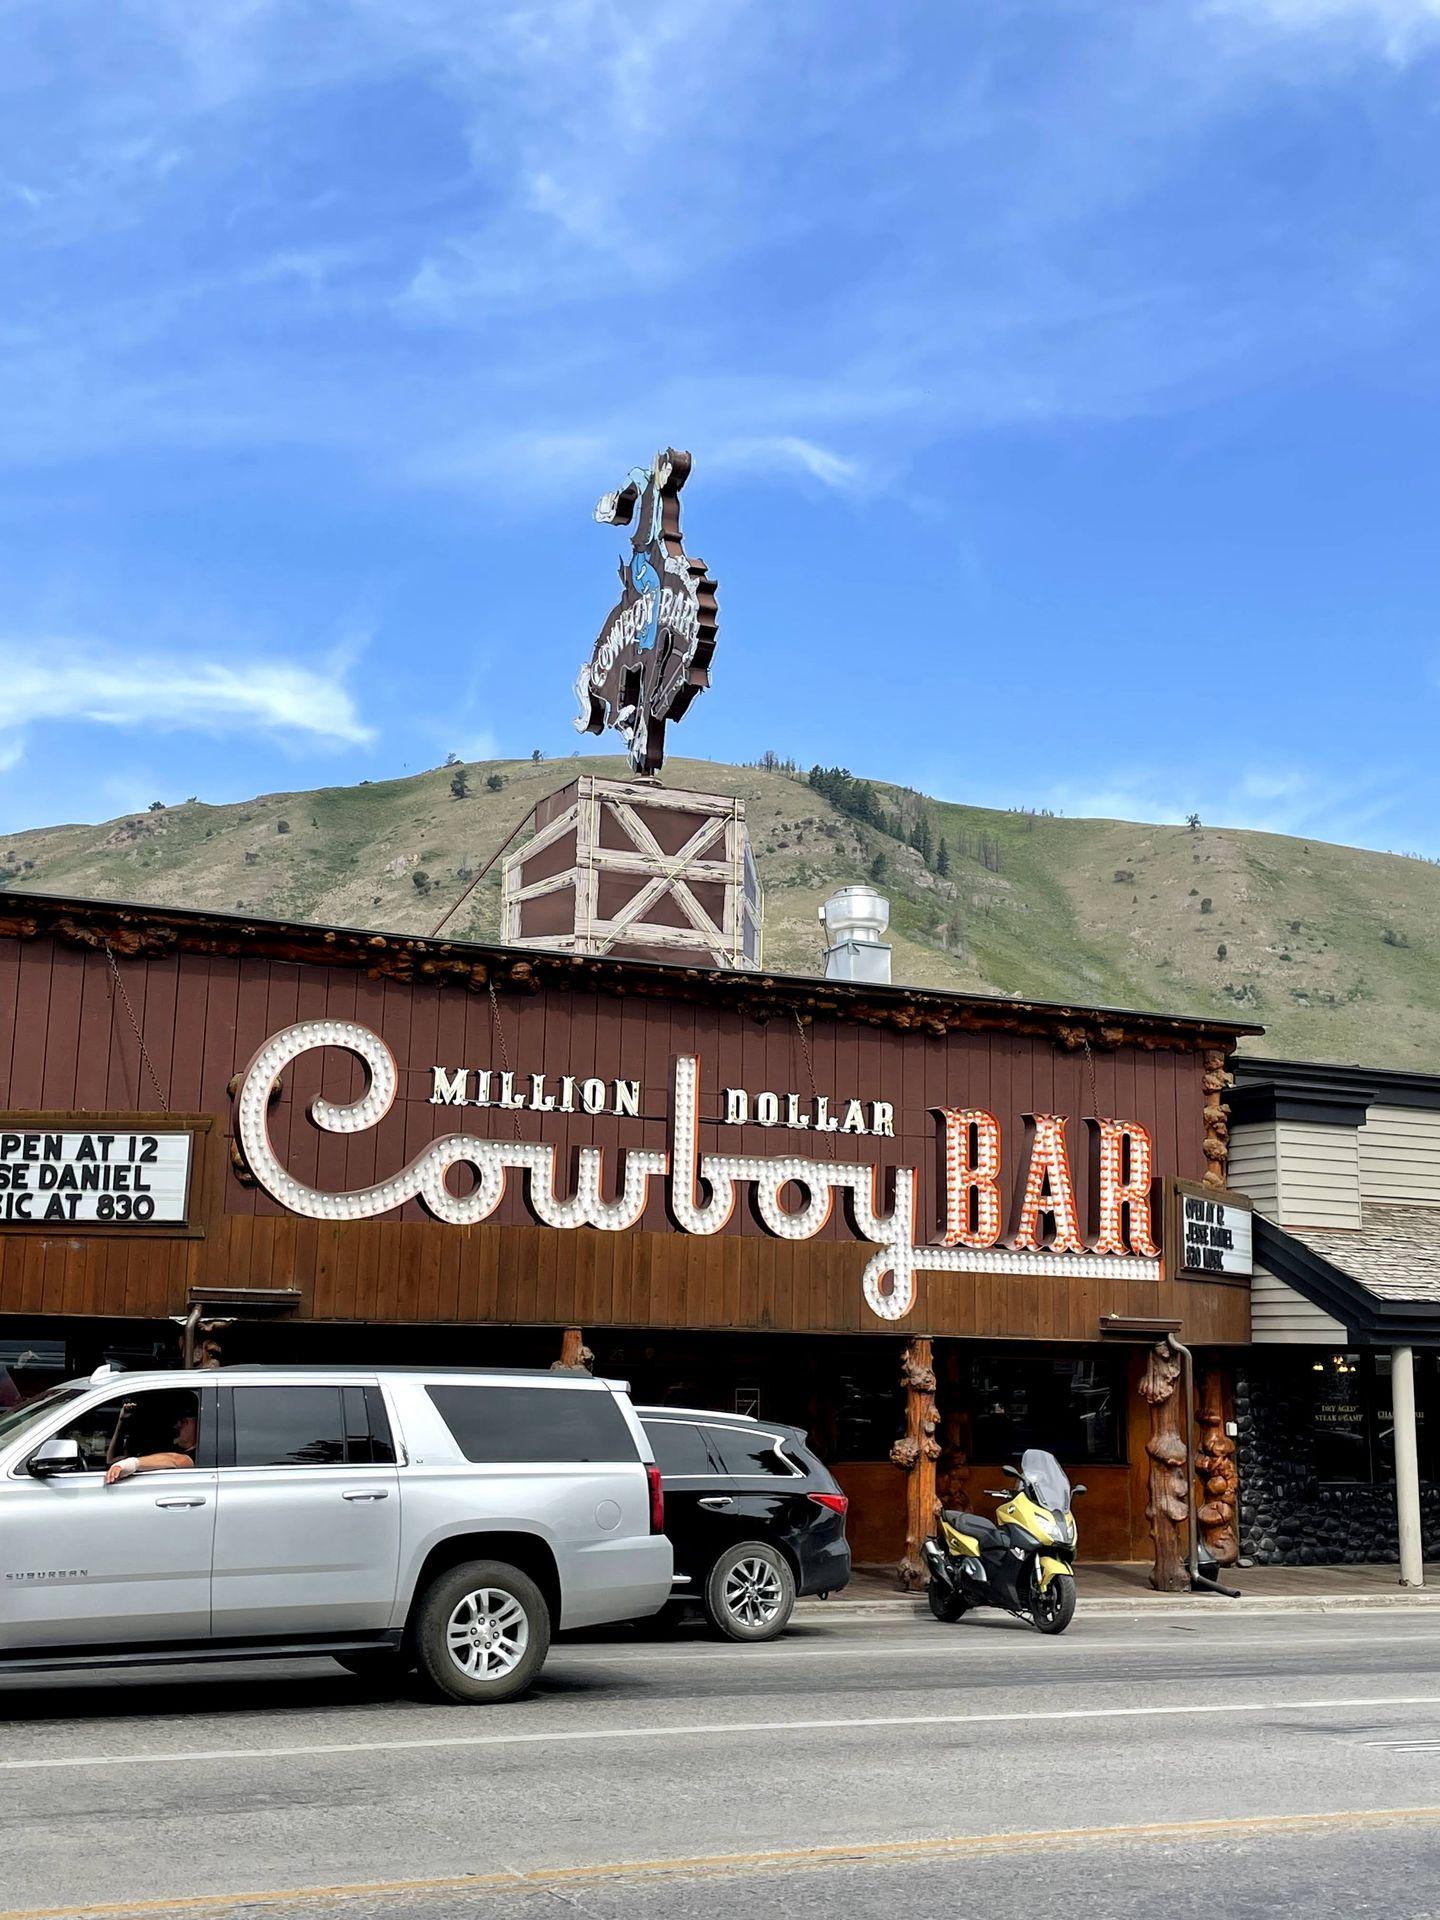 An exterior view of the Million Dollar Cowboy Bar.